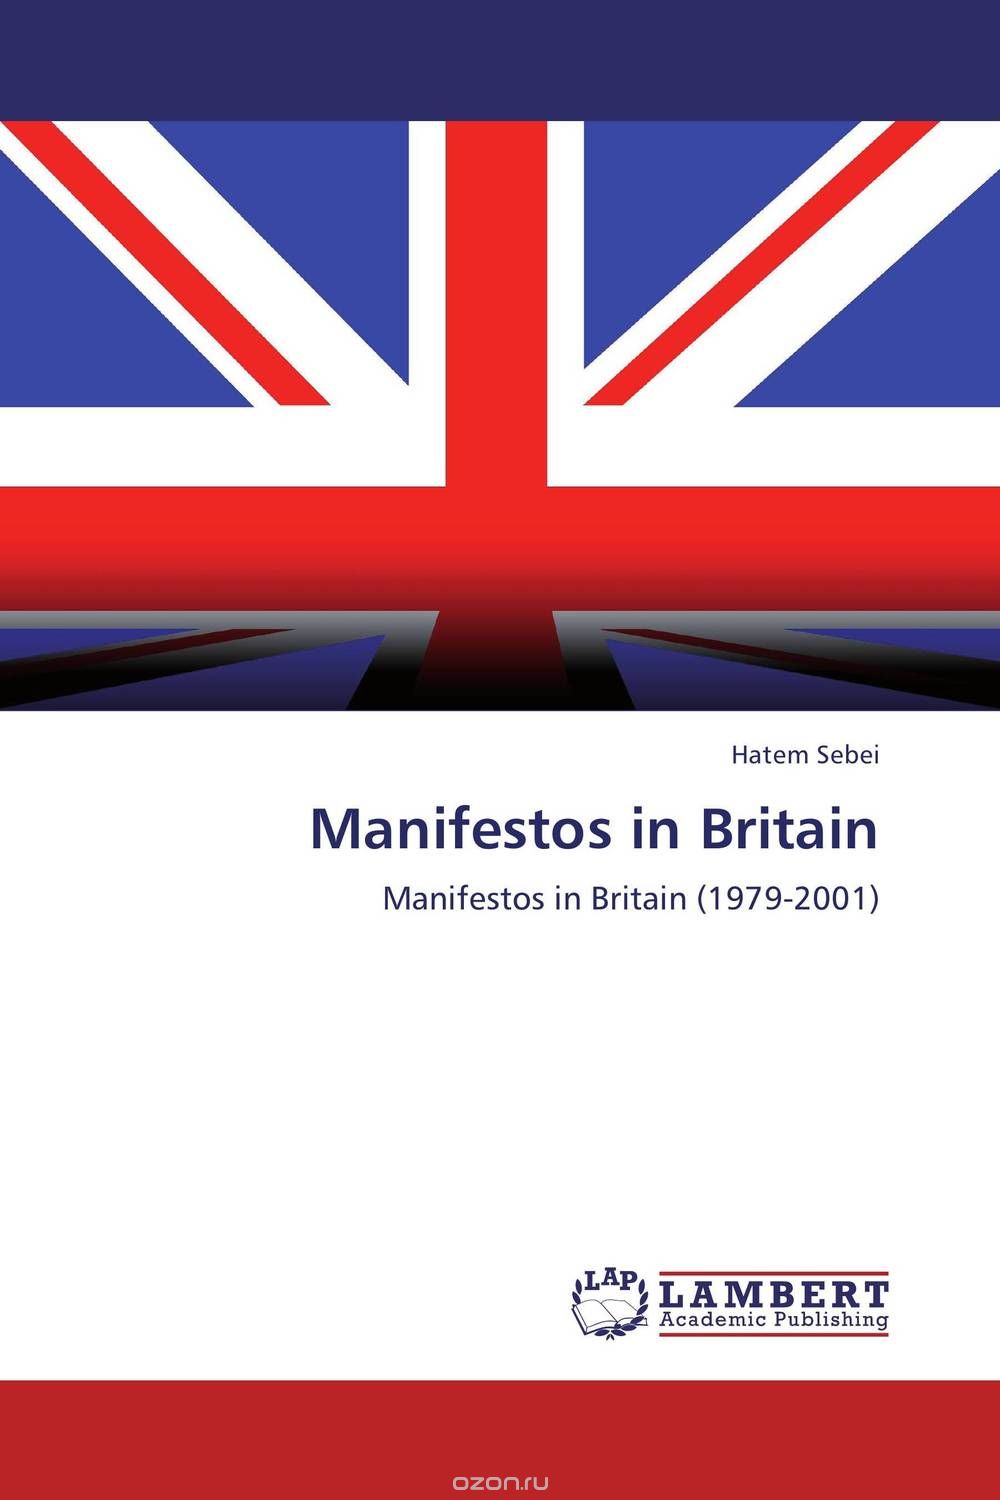 Скачать книгу "Manifestos in Britain"